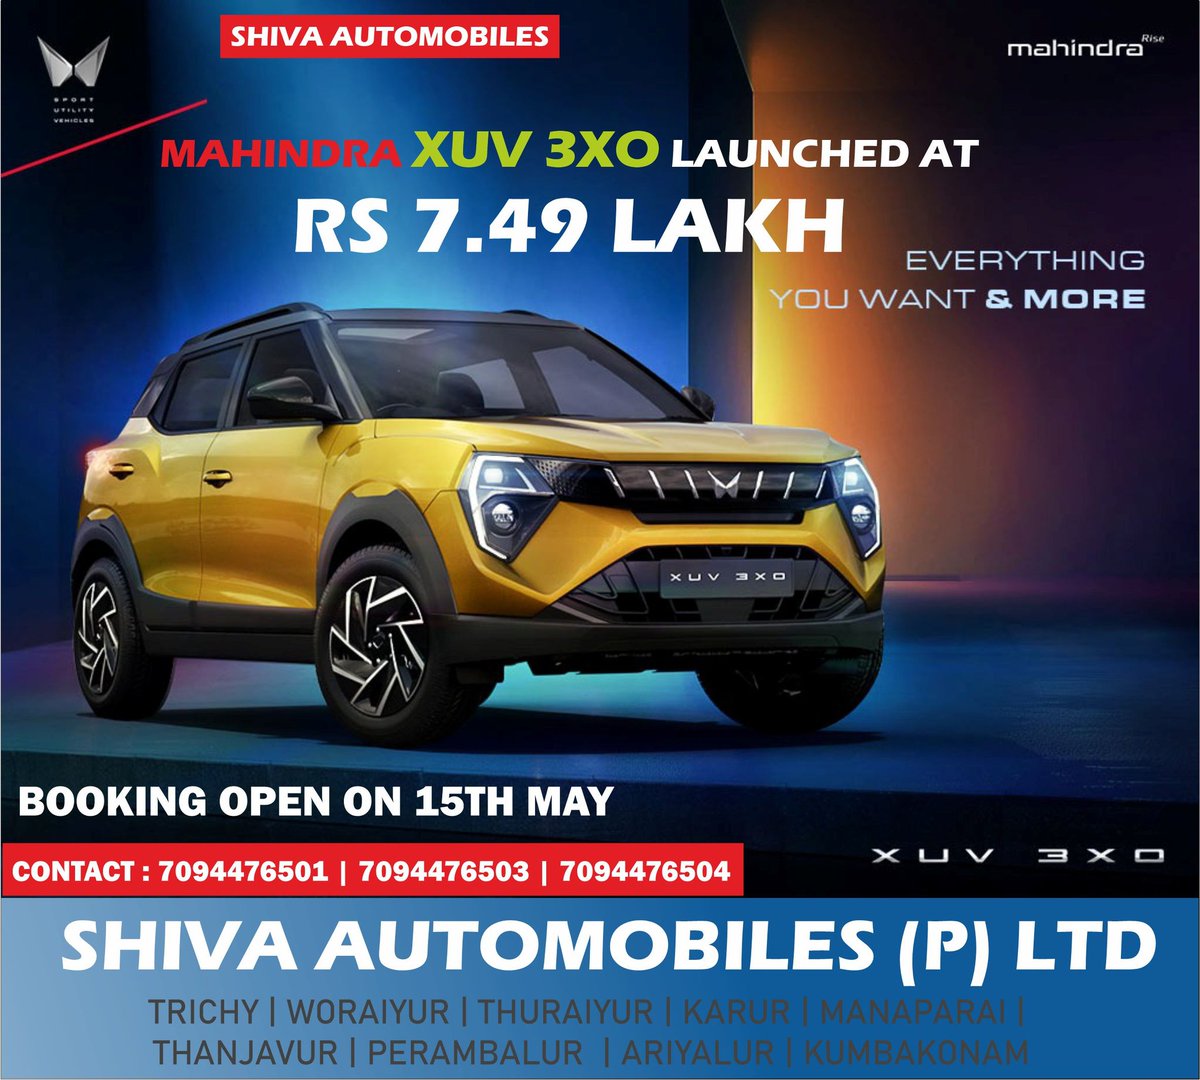 💥Welcome to Shiva Automobiles Mahindra  car showroom.
💥SHIVAAUTOMOBILES💥
#xuv3xo
Starting prize just 7.46LAKH
BOOKING DETAILS CONTACT 
7094476501 | 7094476503 | 7094476504
#shivaautomobiles #mahindra #trichy #manaparai #karur #ariyalur #pudukkottai #perambalur #thanjavur